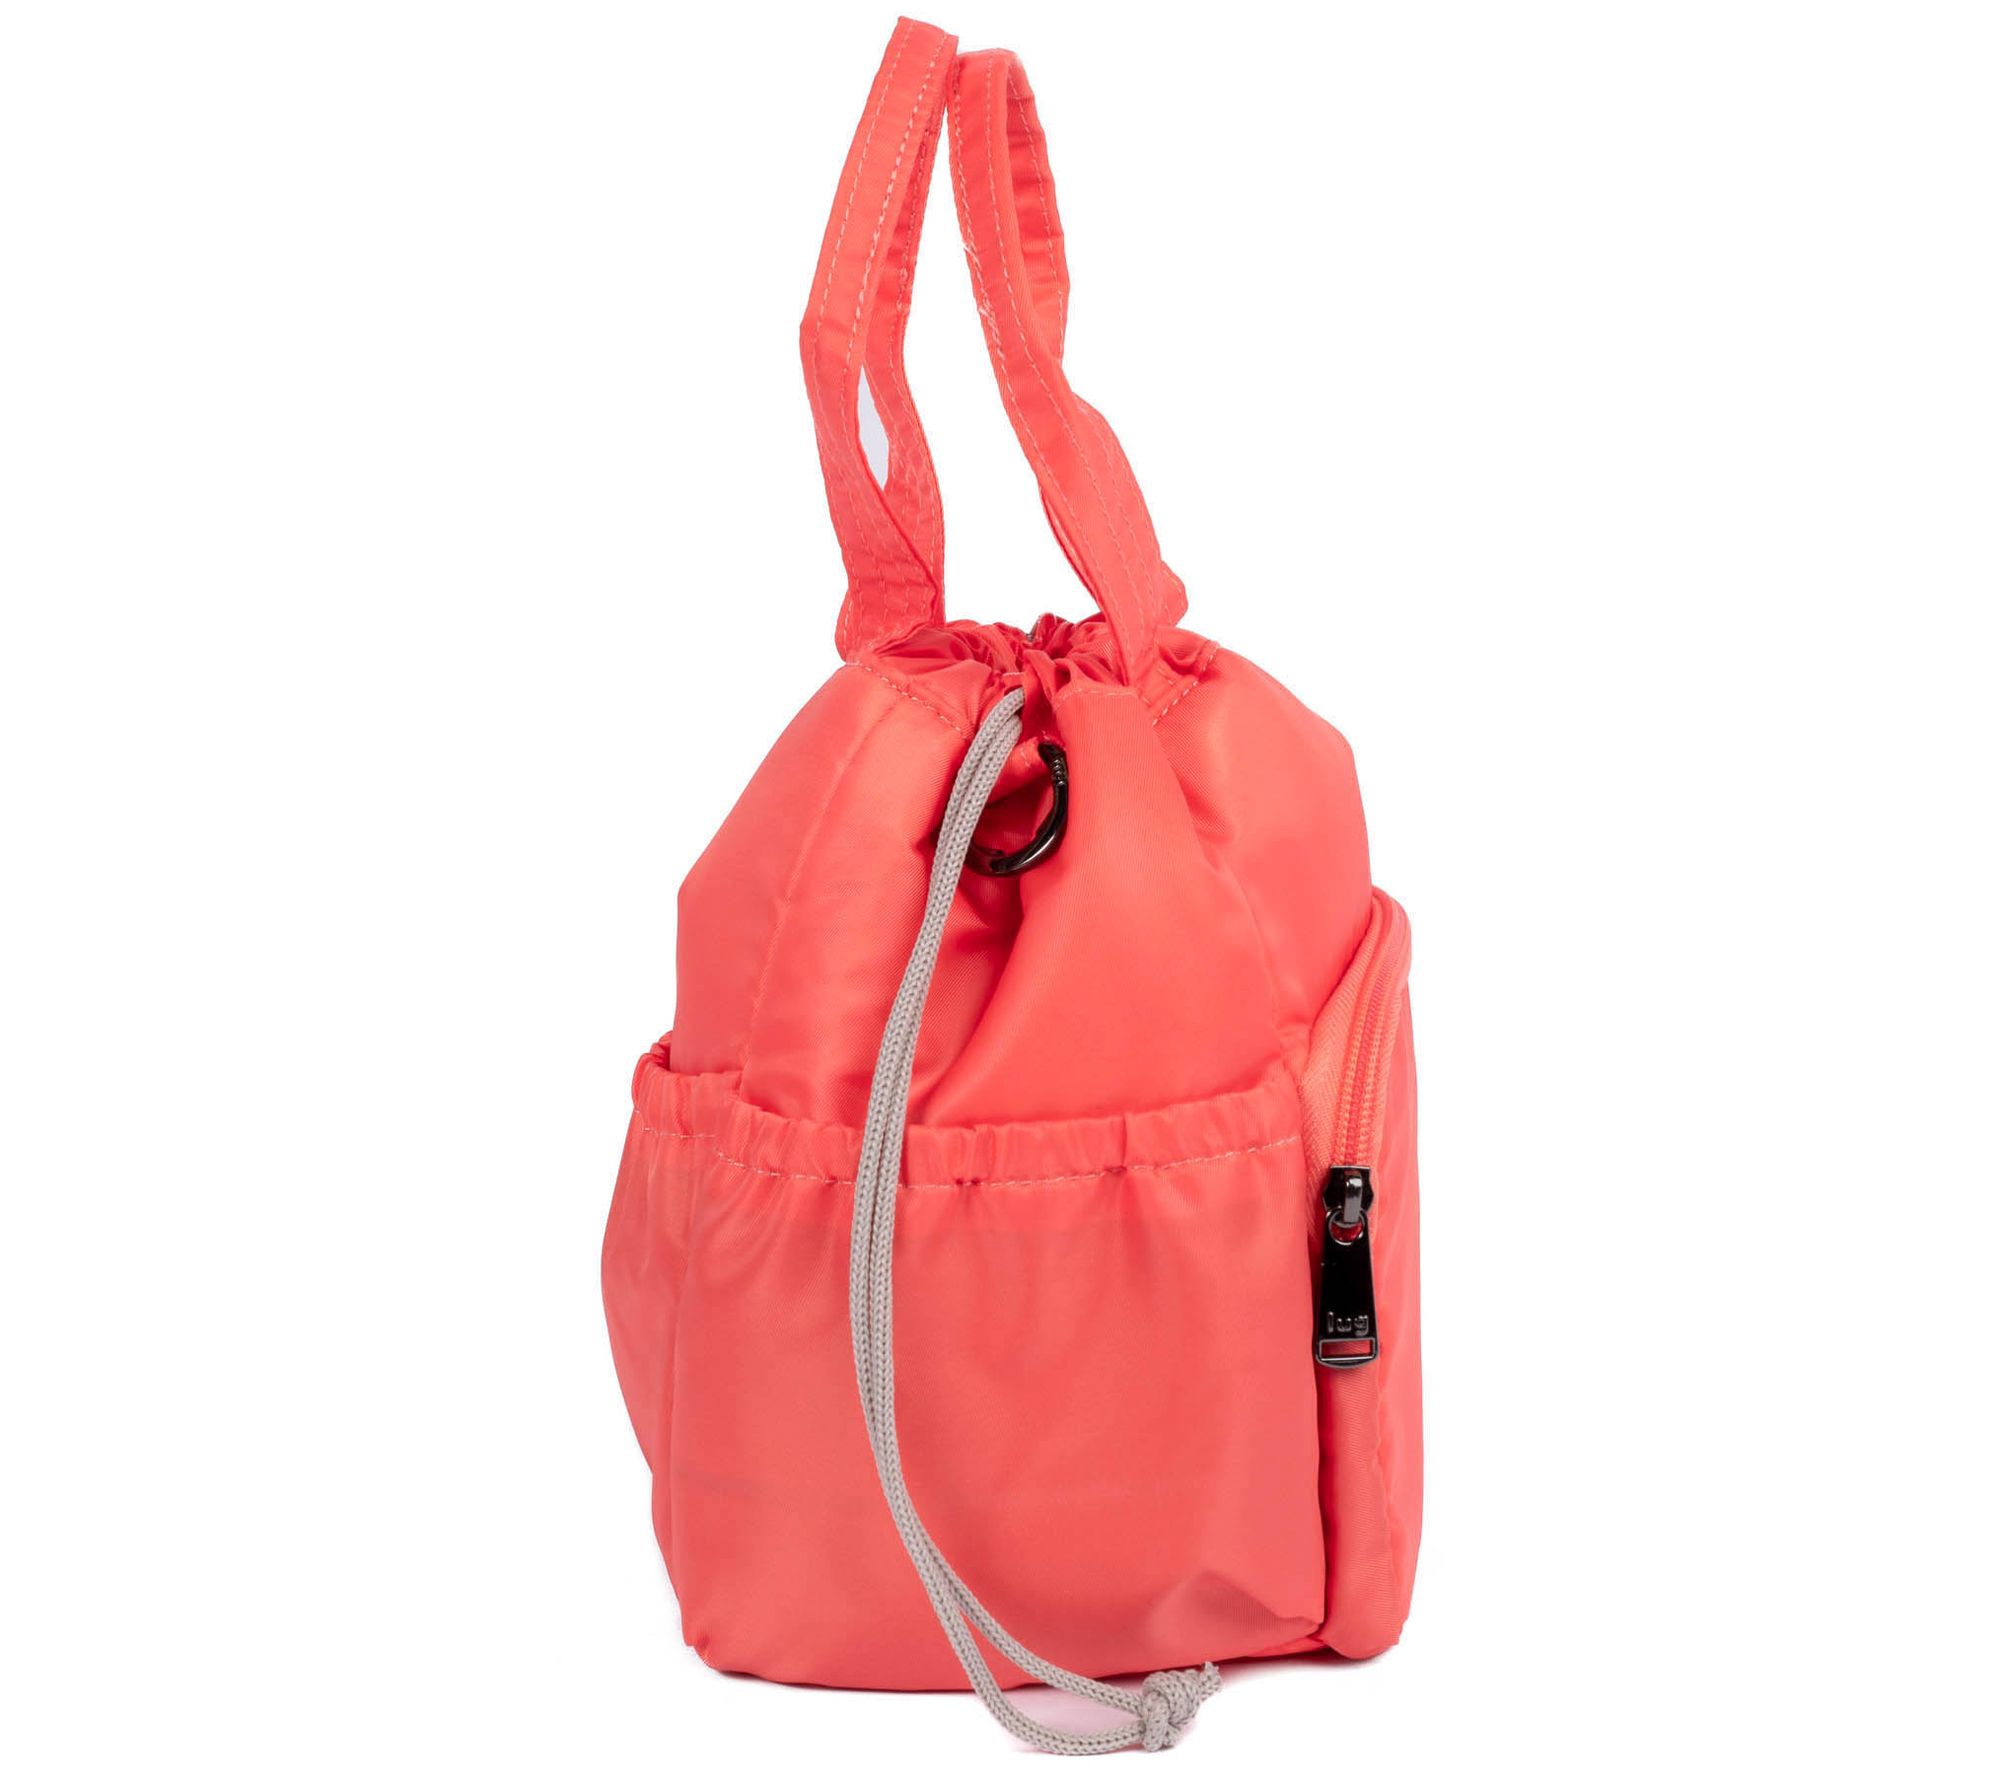 Sugarplum Style Tip  Shopping Designer Handbags for Less - Hi Sugarplum!